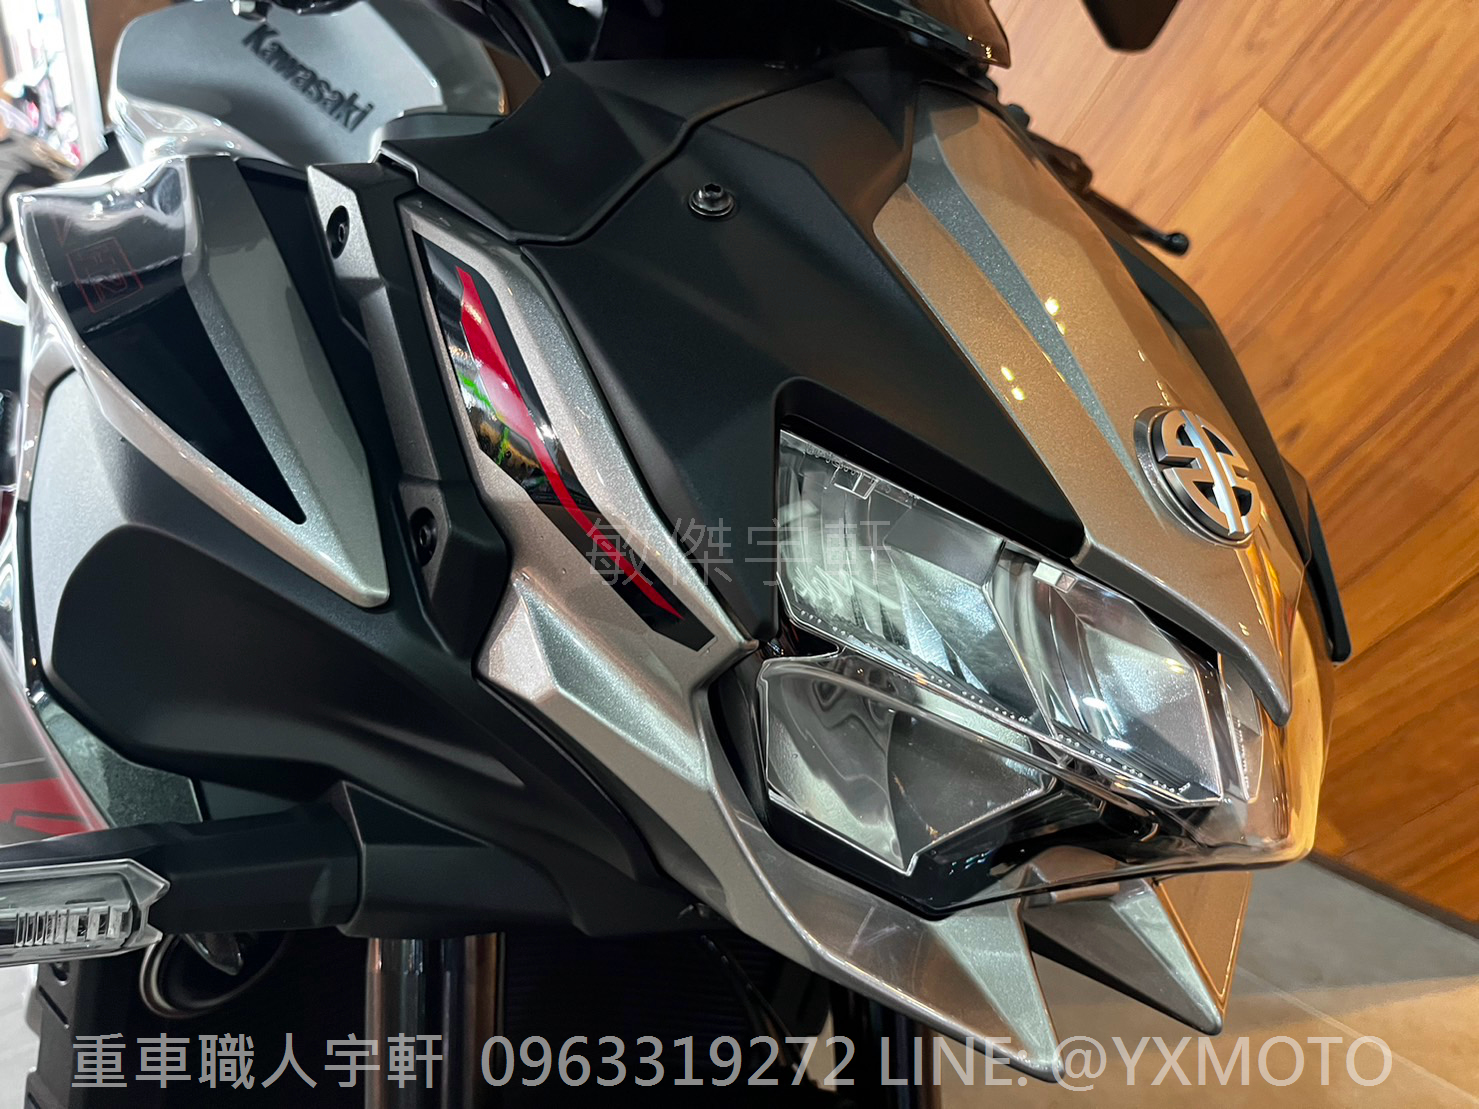 KAWASAKI Z H2新車出售中 【敏傑宇軒】2023 Kawasaki ZH2 機械增壓街跑 灰黑紅骨 總代理公司車 | 重車銷售職人-宇軒 (敏傑)